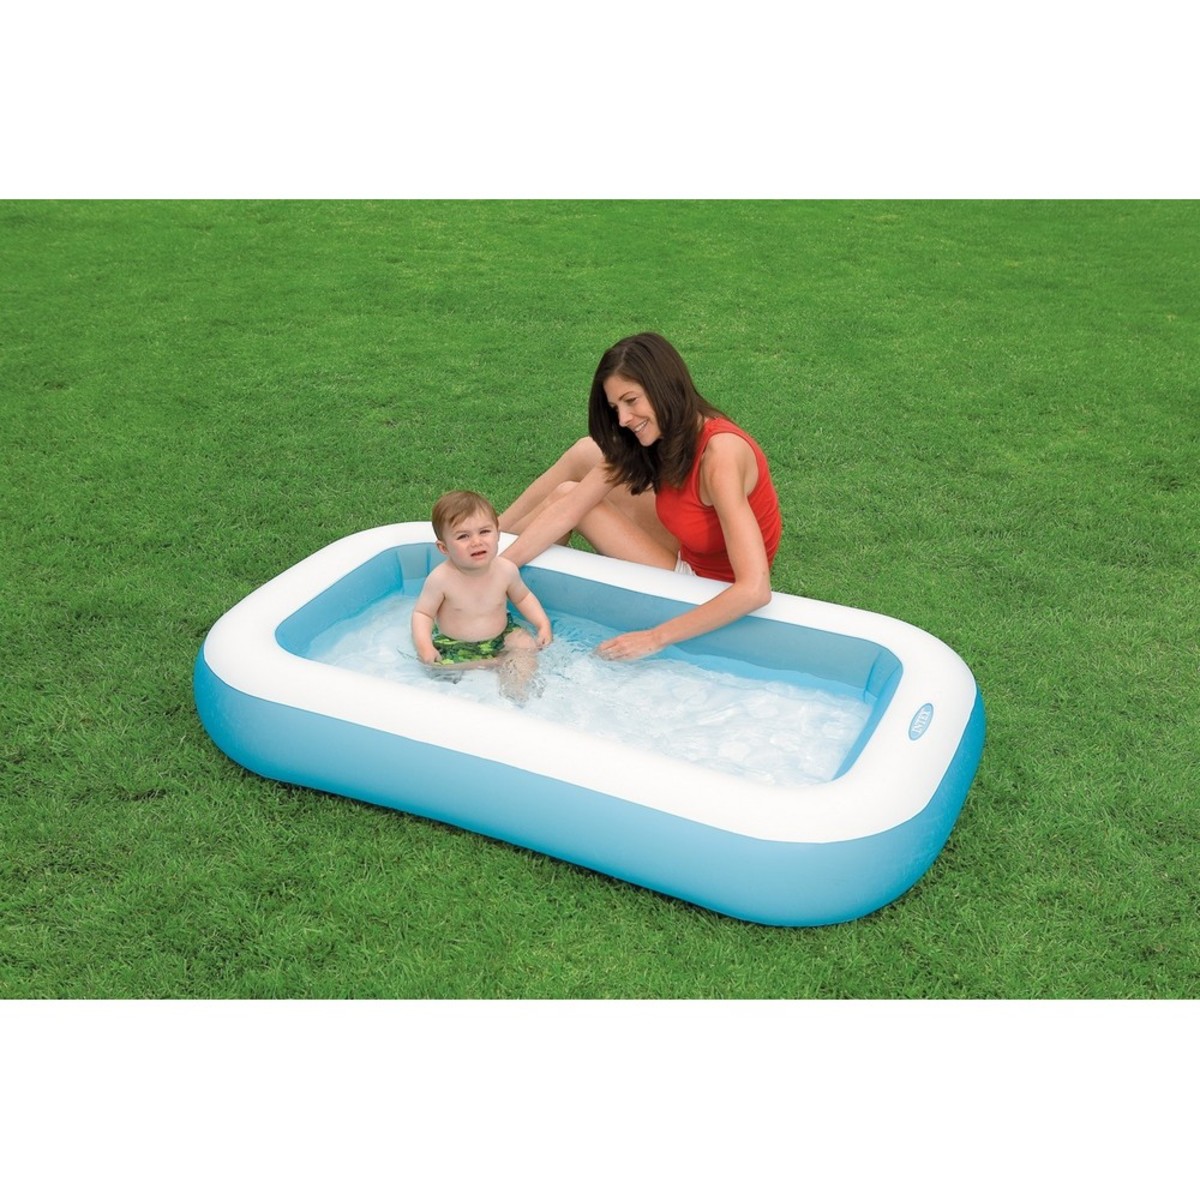 Intex Rectangular Baby Pool 57403